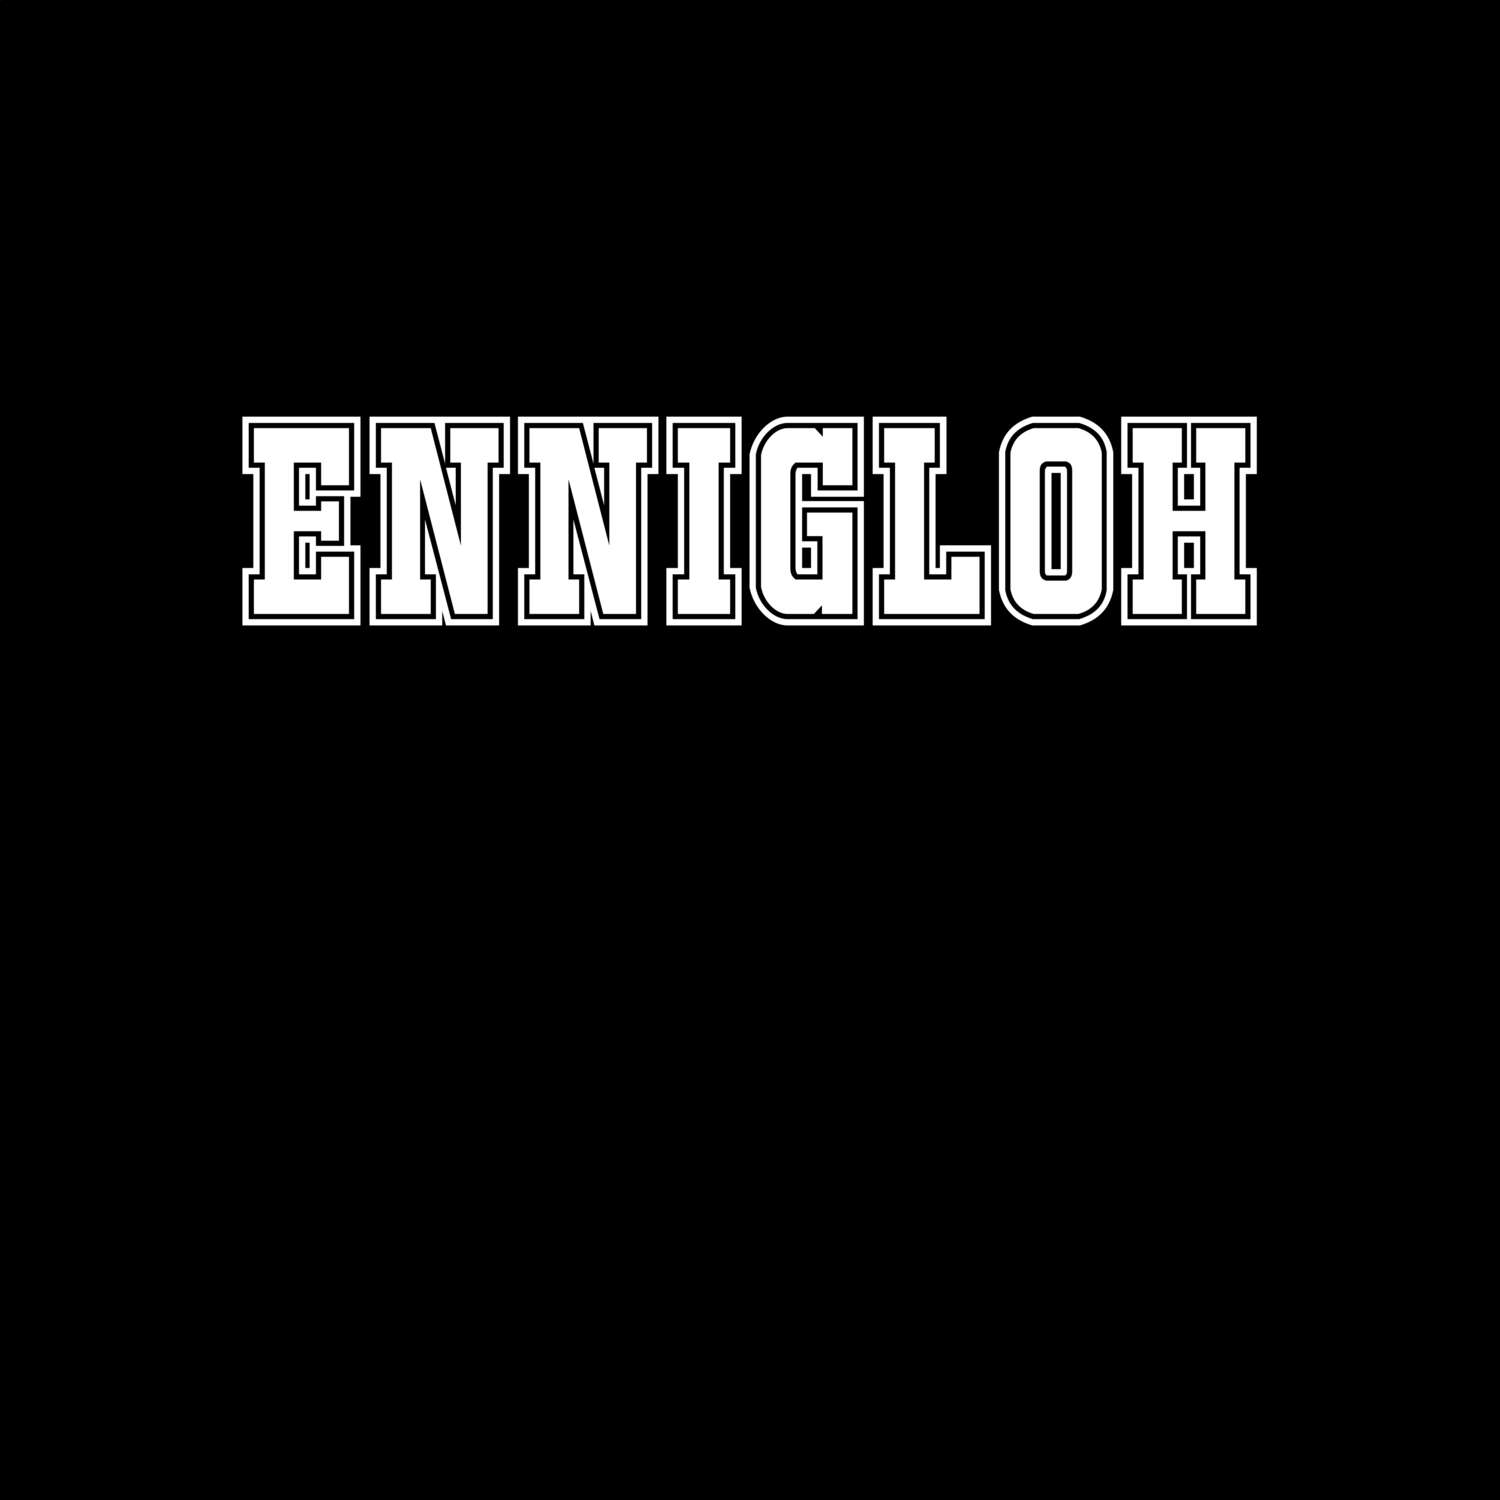 Ennigloh T-Shirt »Classic«